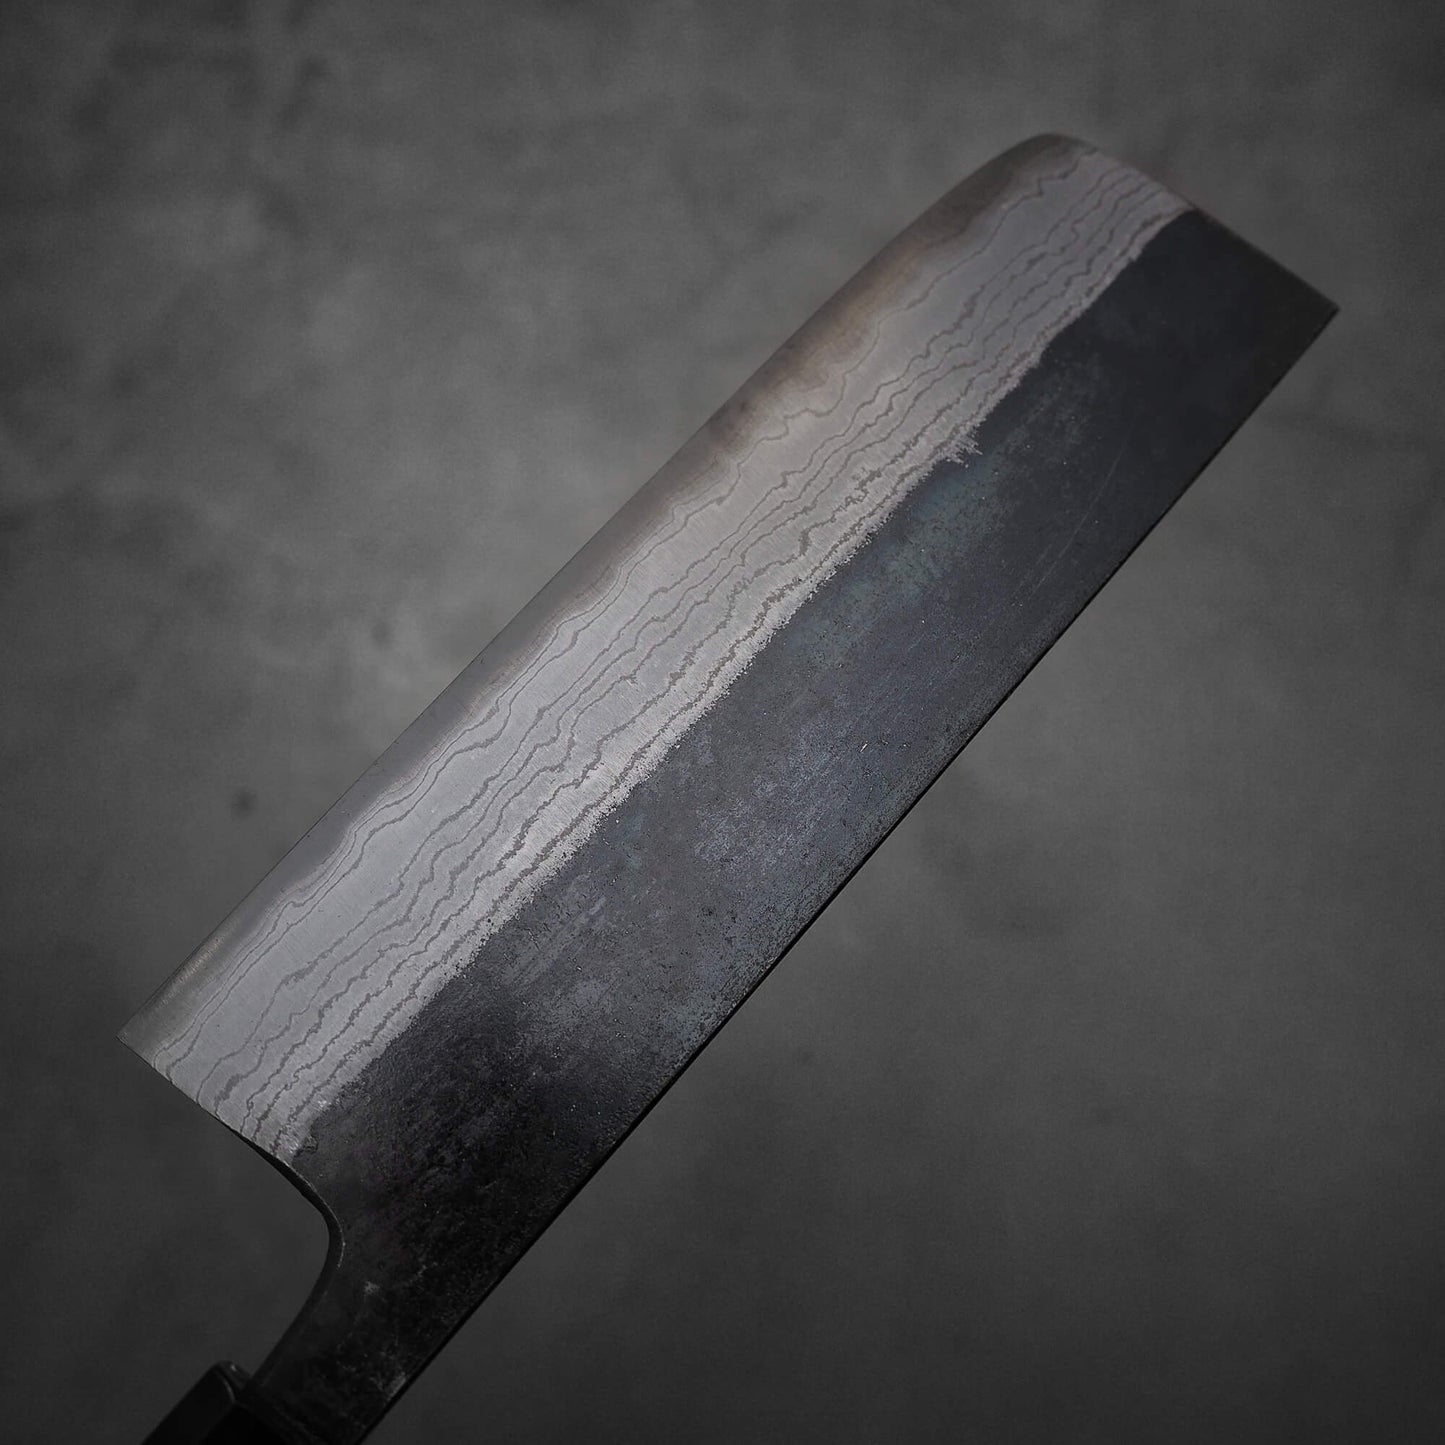 Top view of Hatsukokoro Kumokage kurouchi damascus aogami#2 nakiri knife. Image shows left side of the blade